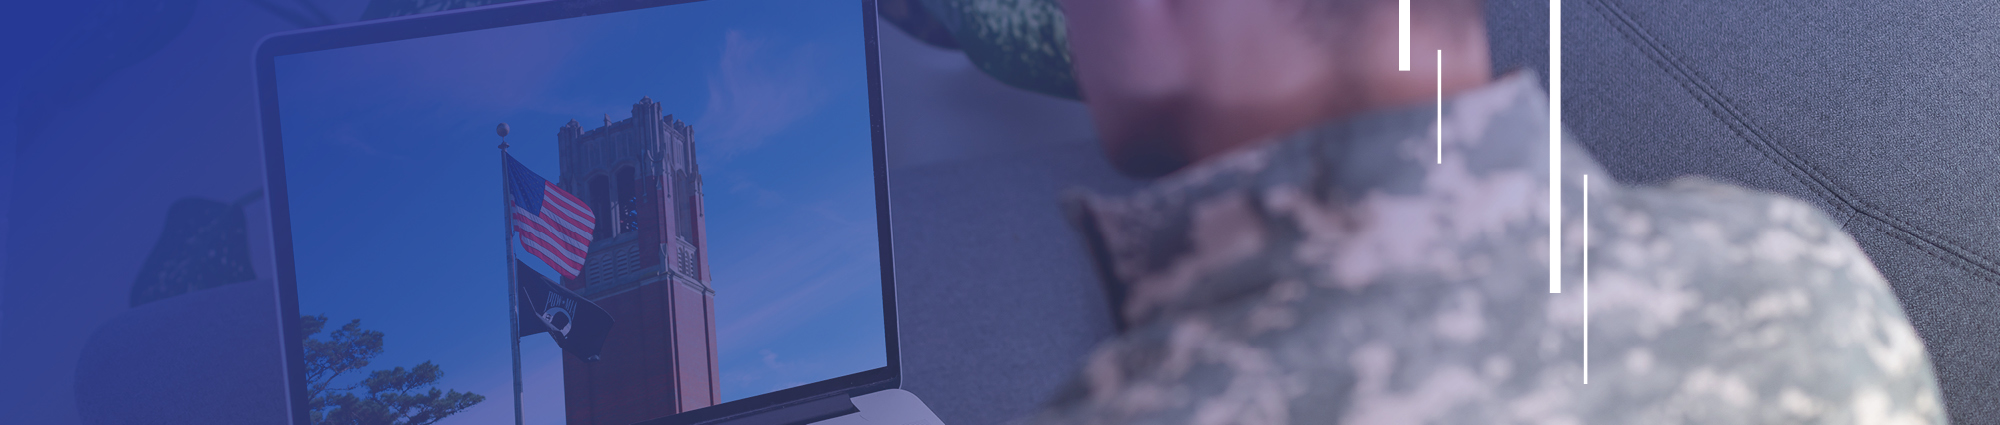 UF offers No. 1 MBA online program for veterans